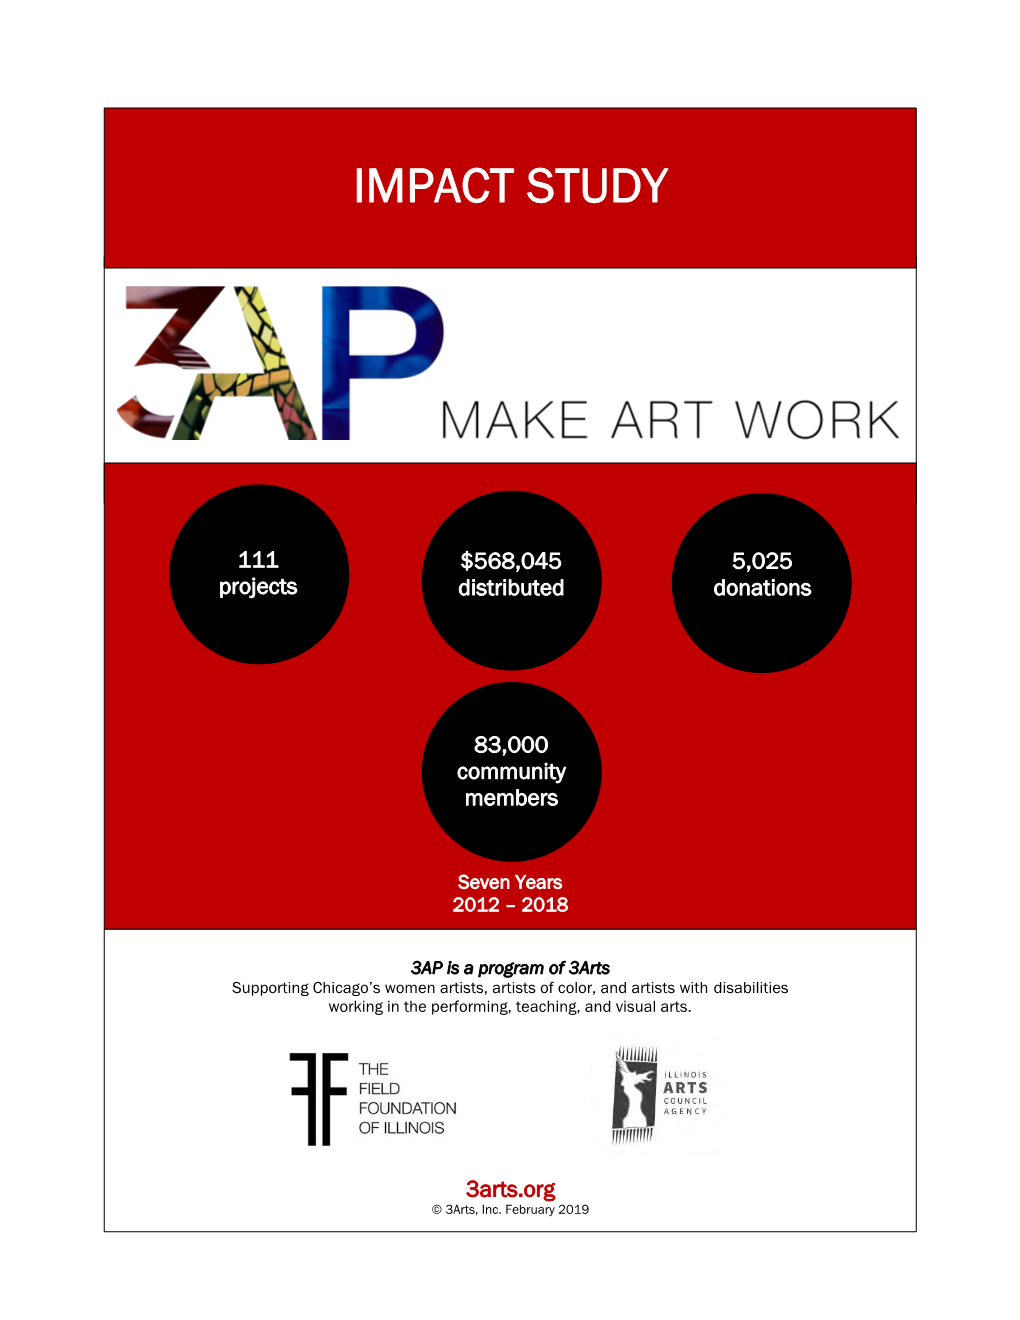 Impact Study